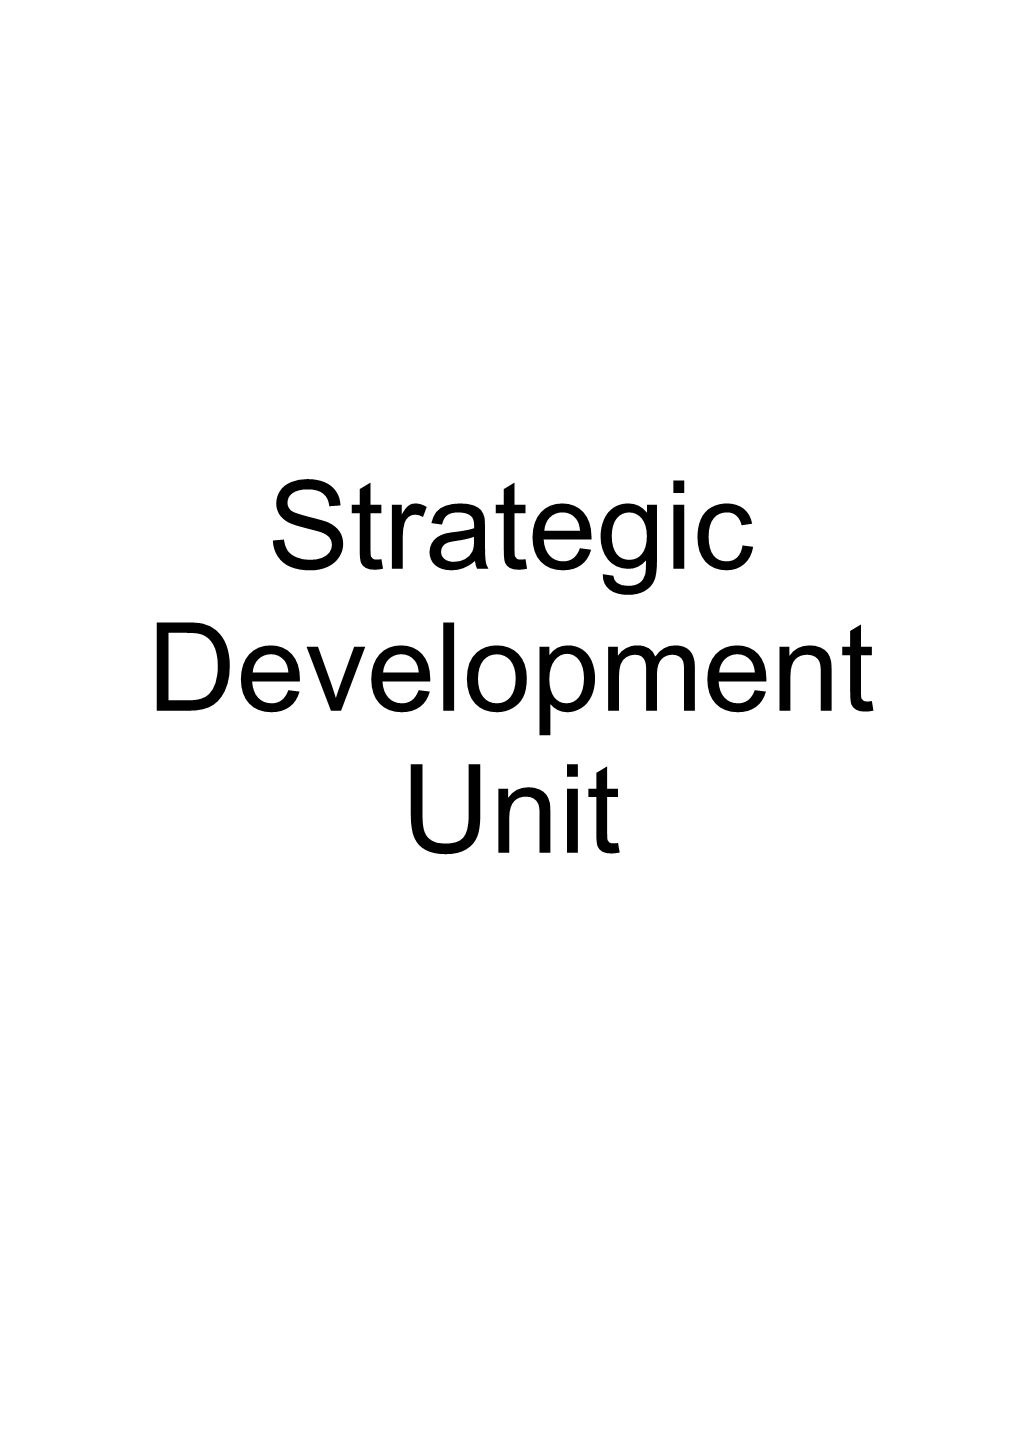 Strategic Development Unit